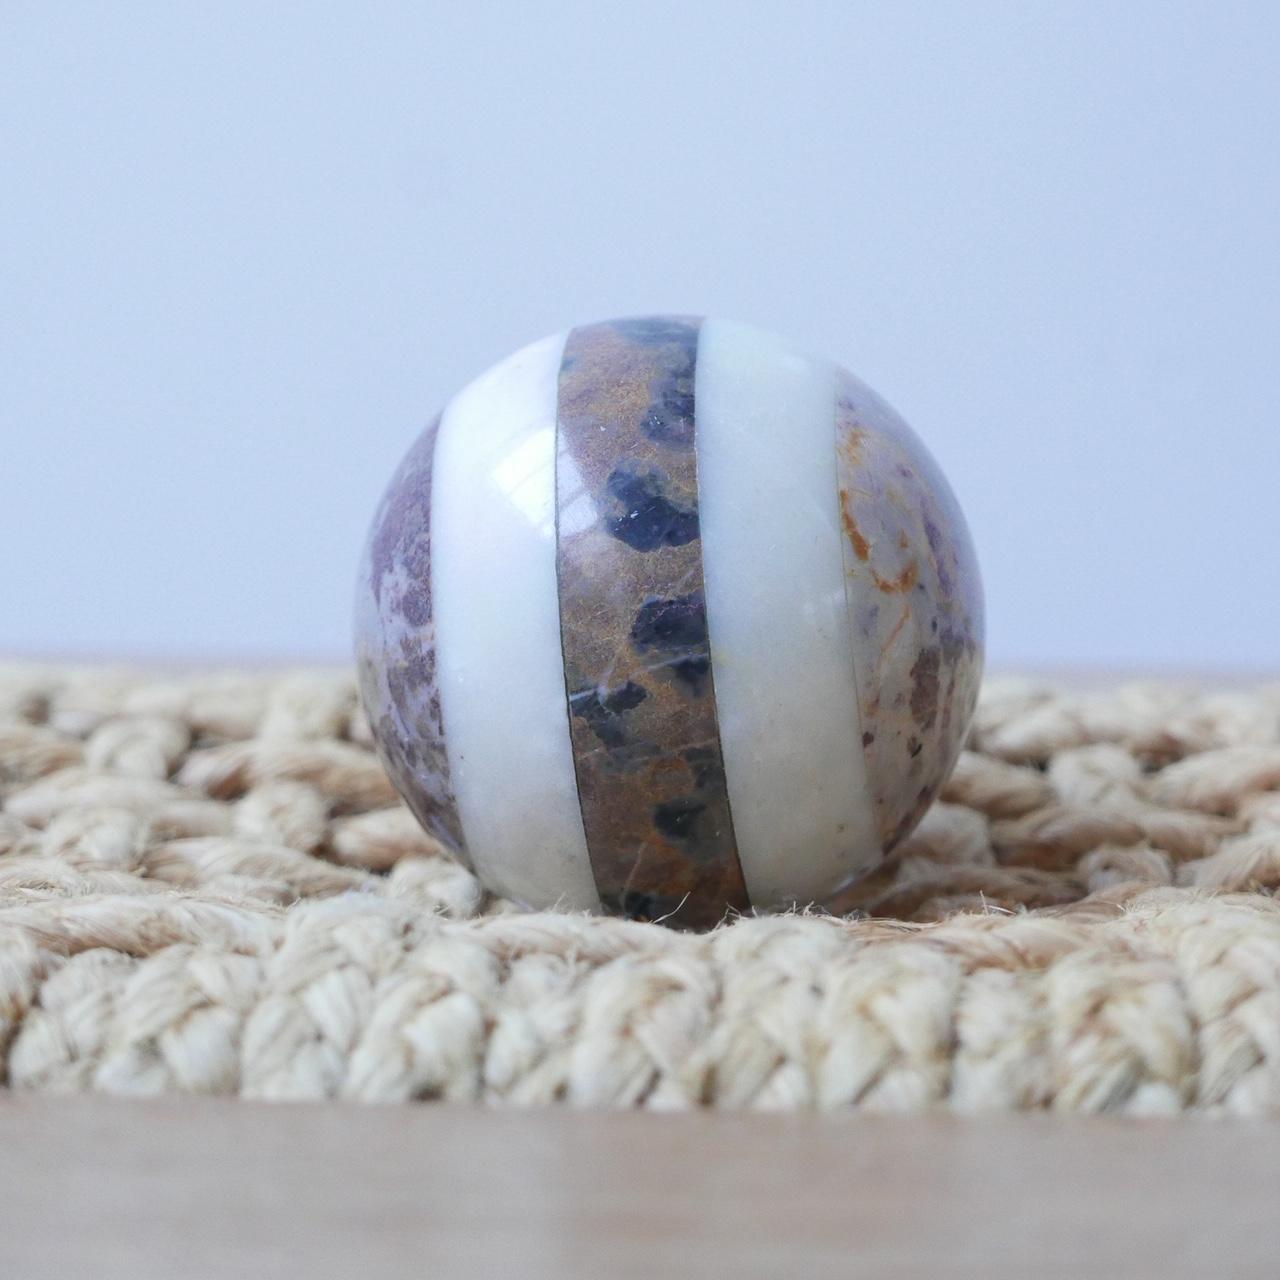 Marble Specimen Decorative Balls For Sale 3